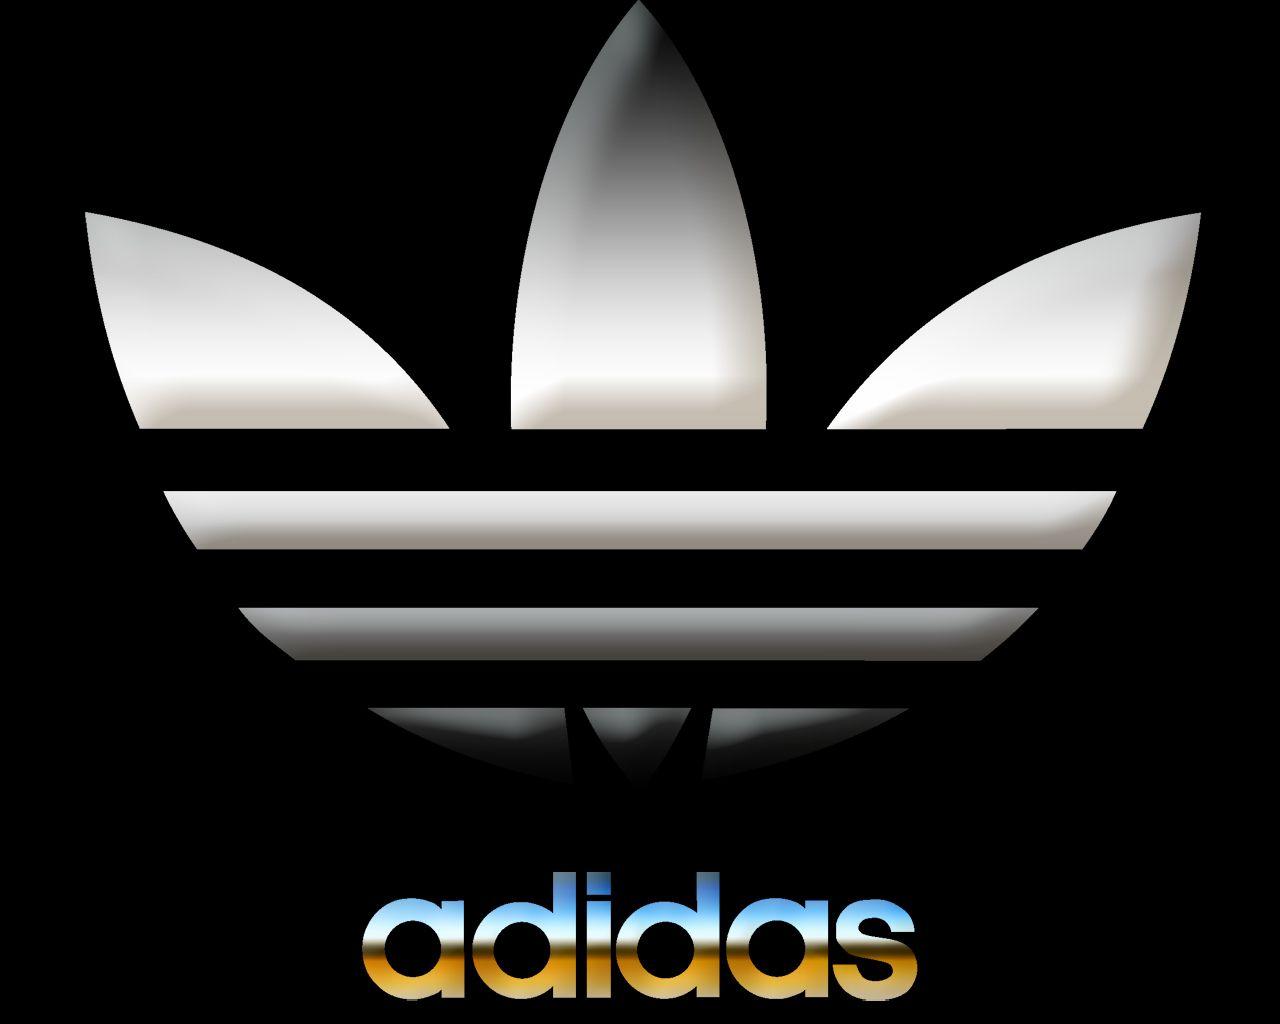 Sick Adidas Logo - Adidas Original Wallpaper | Image Wallpapers